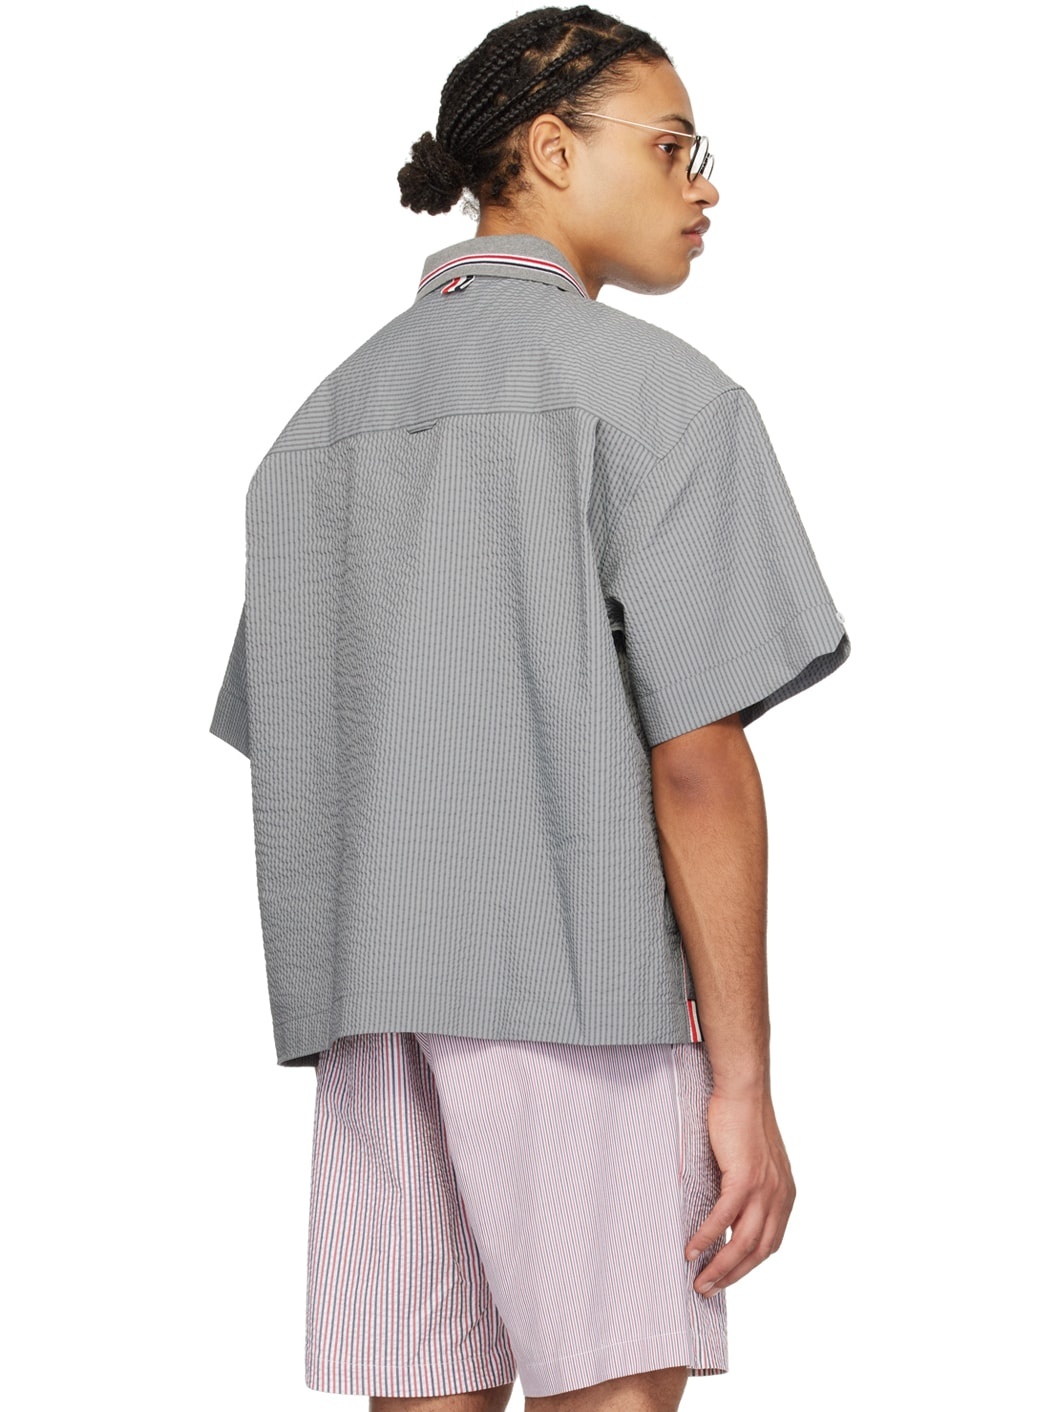 Gray Button Placket Shirt - 3